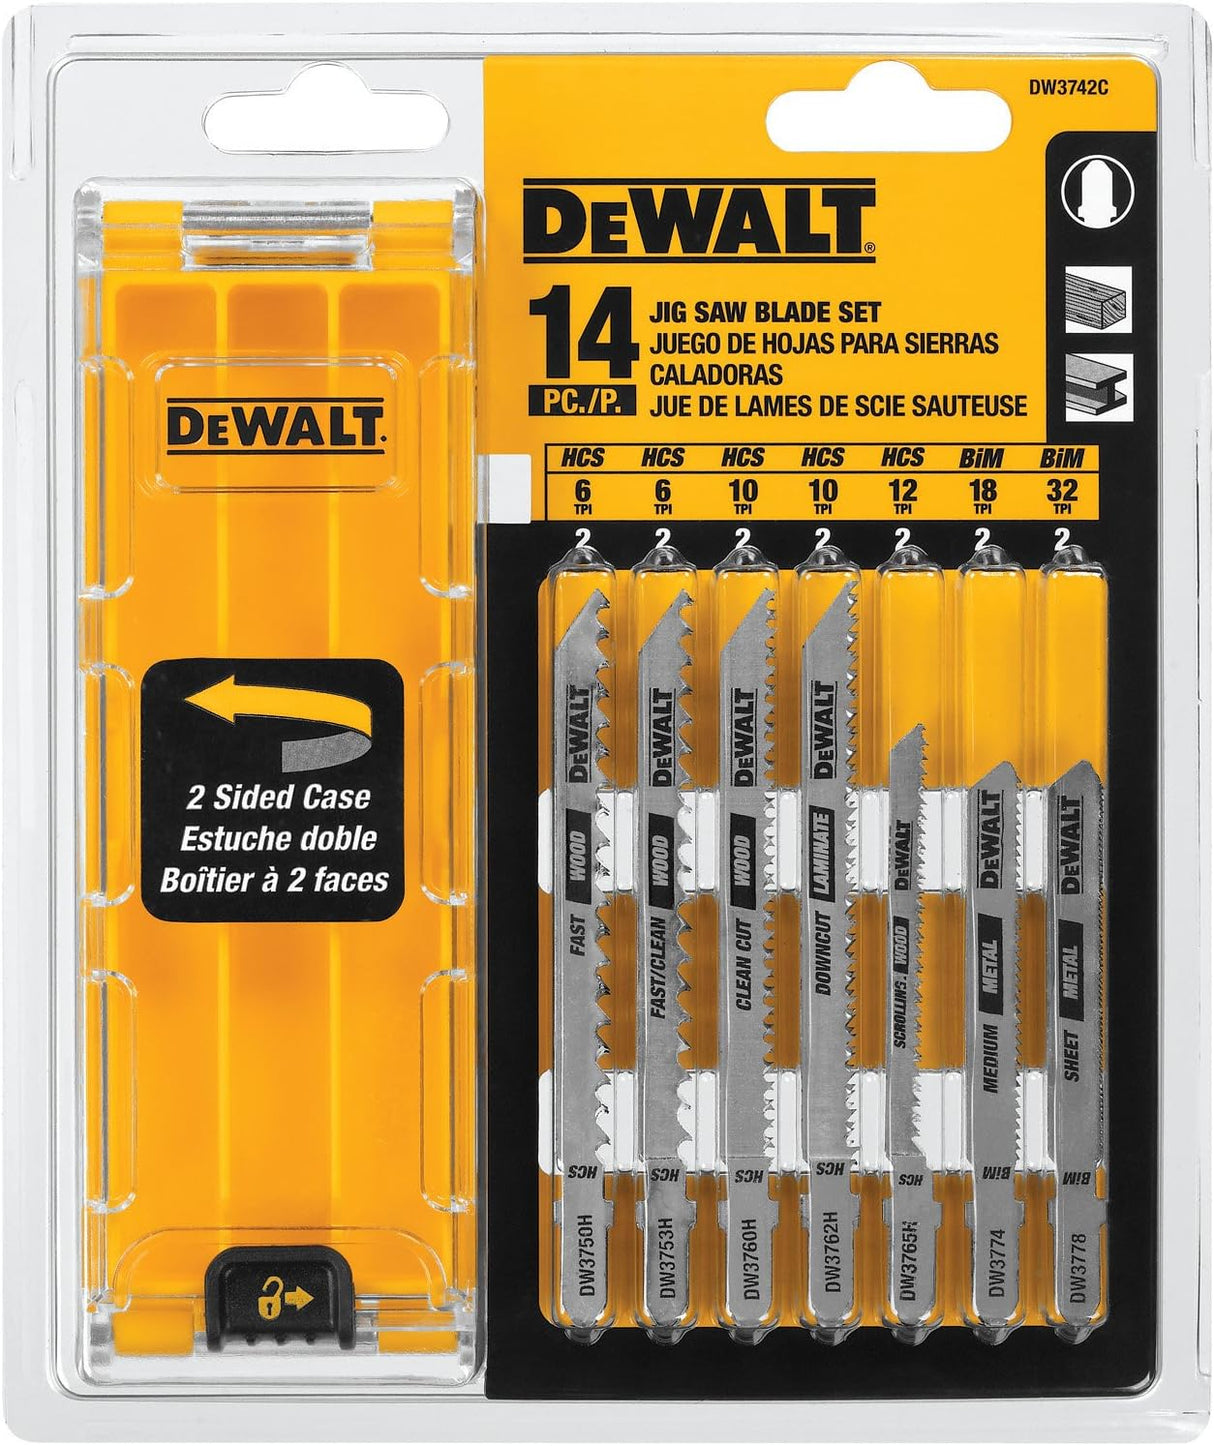 DeWalt Jigsaw Blades Set with Case, 14-Piece (DW3742C)